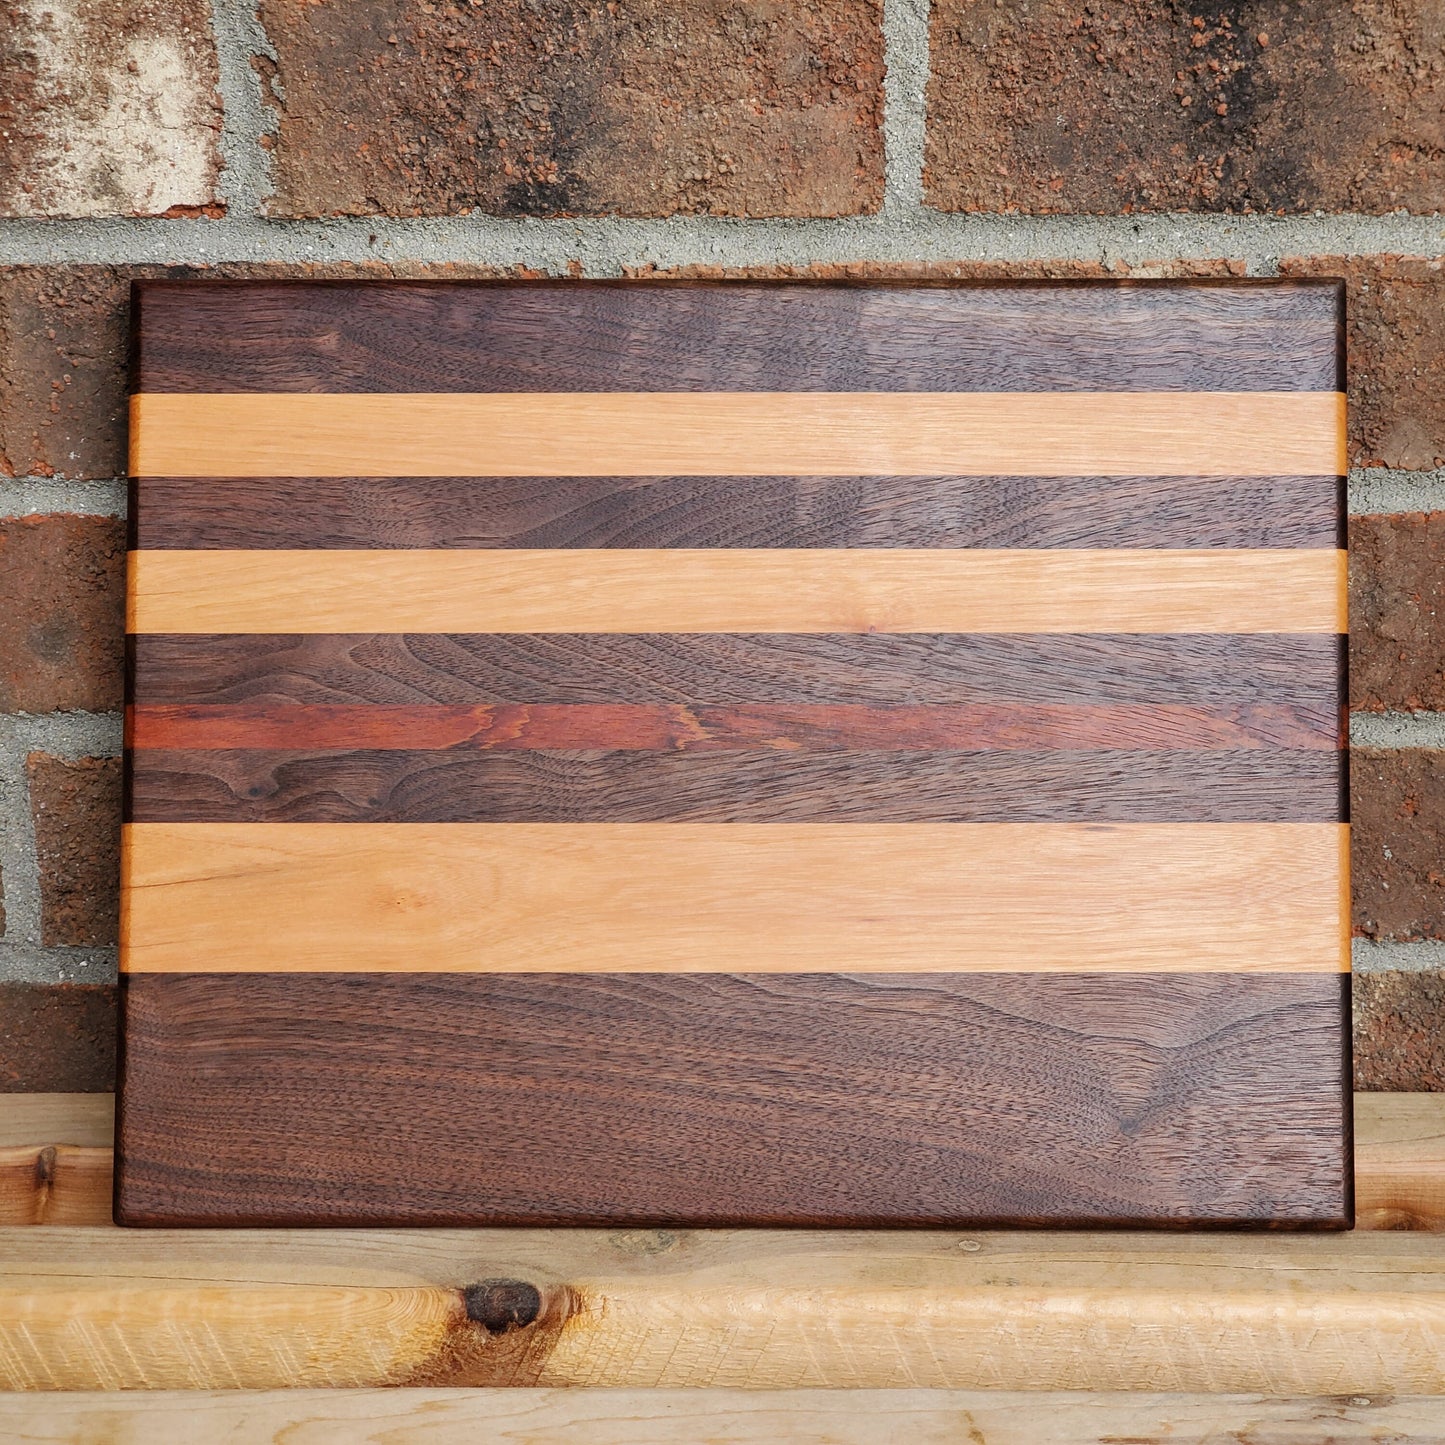 Custom Made Cutting Boards - Hardwood Cutting Boards - Handmade - Domestic Hardwood - Exotic Hardwood - Small - Medium - Large - Kitchen